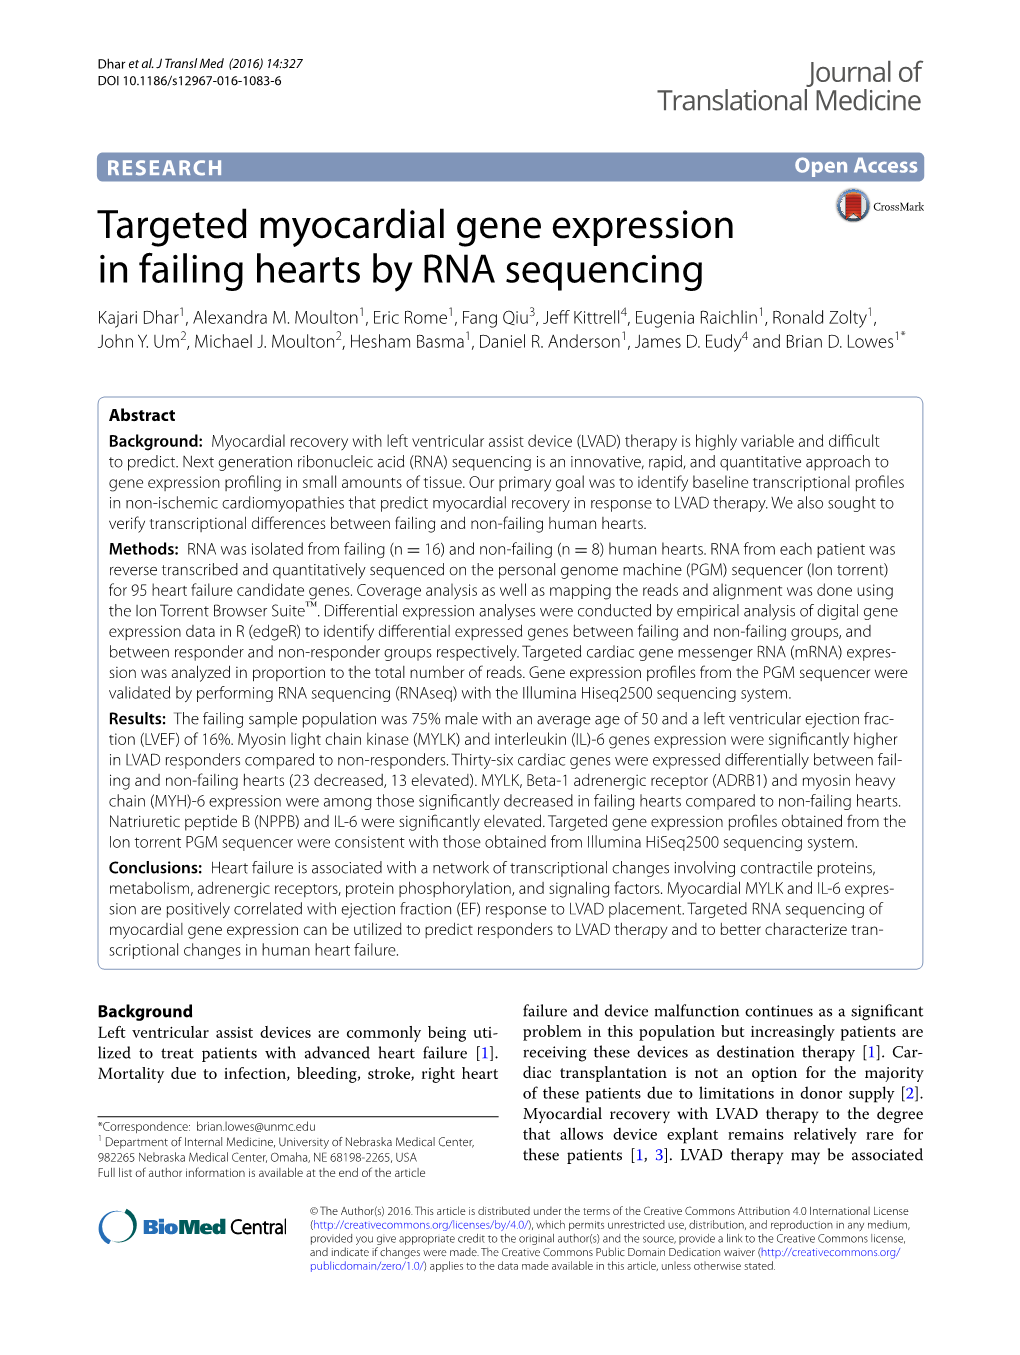 Targeted Myocardial Gene Expression in Failing Hearts by RNA Sequencing Kajari Dhar1, Alexandra M